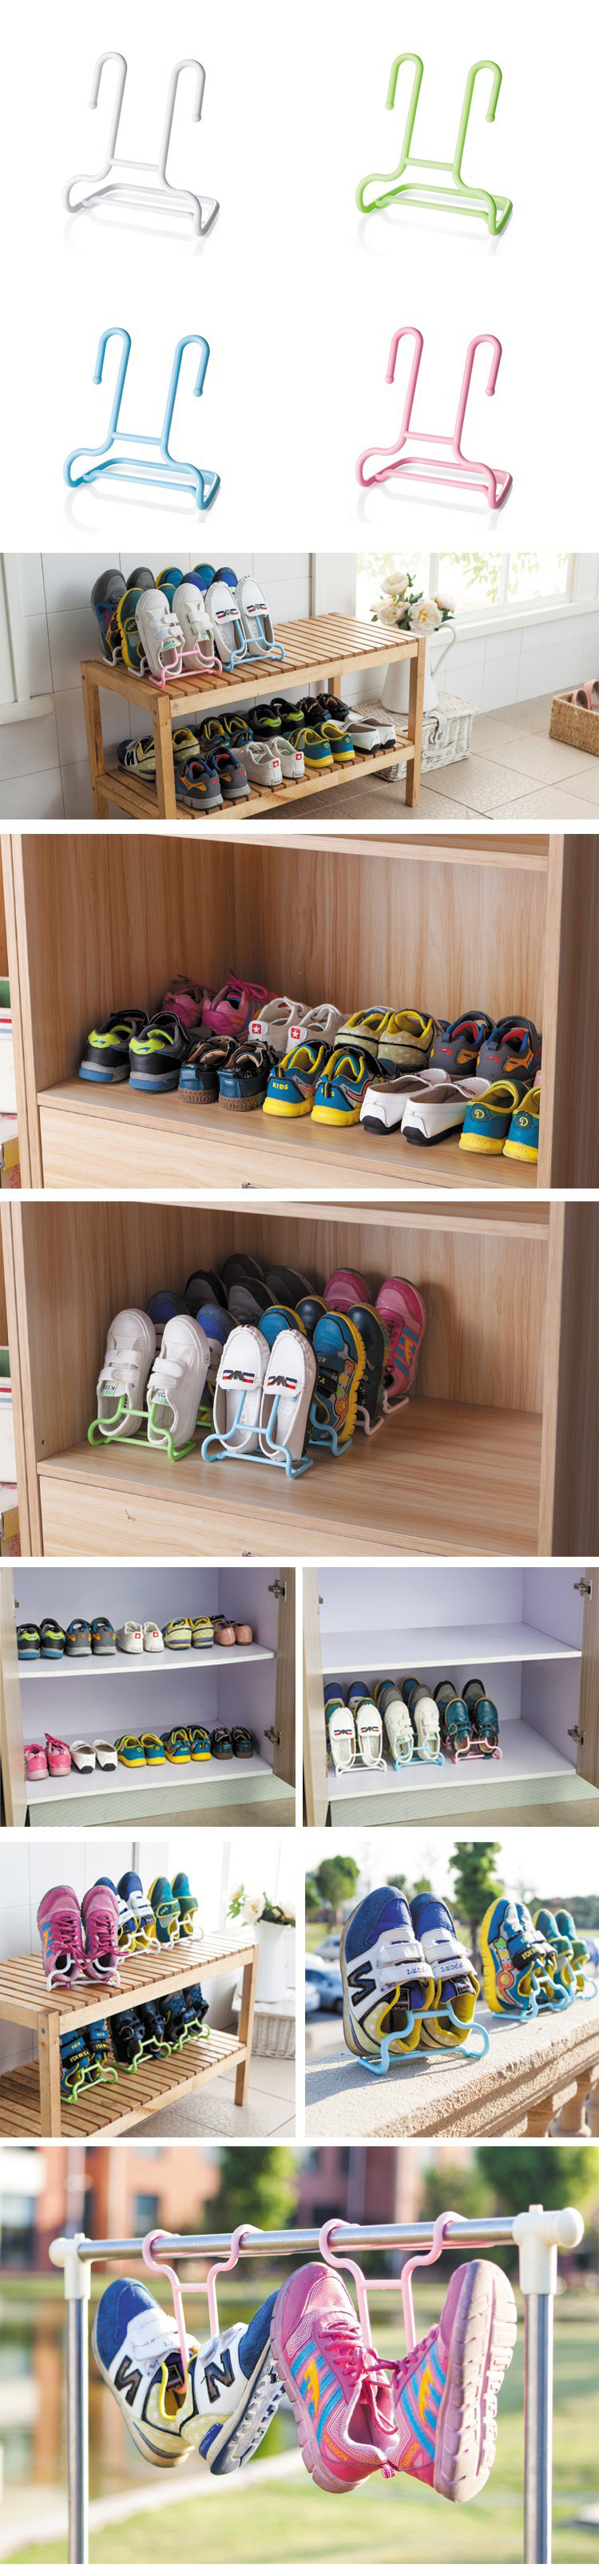 2PCSSet-Multi-function-Plastic-Children-Kids-Shoes-Hanging-Storage-Shelf-Drying-Rack-Shoe-Rack-Stand-1297892